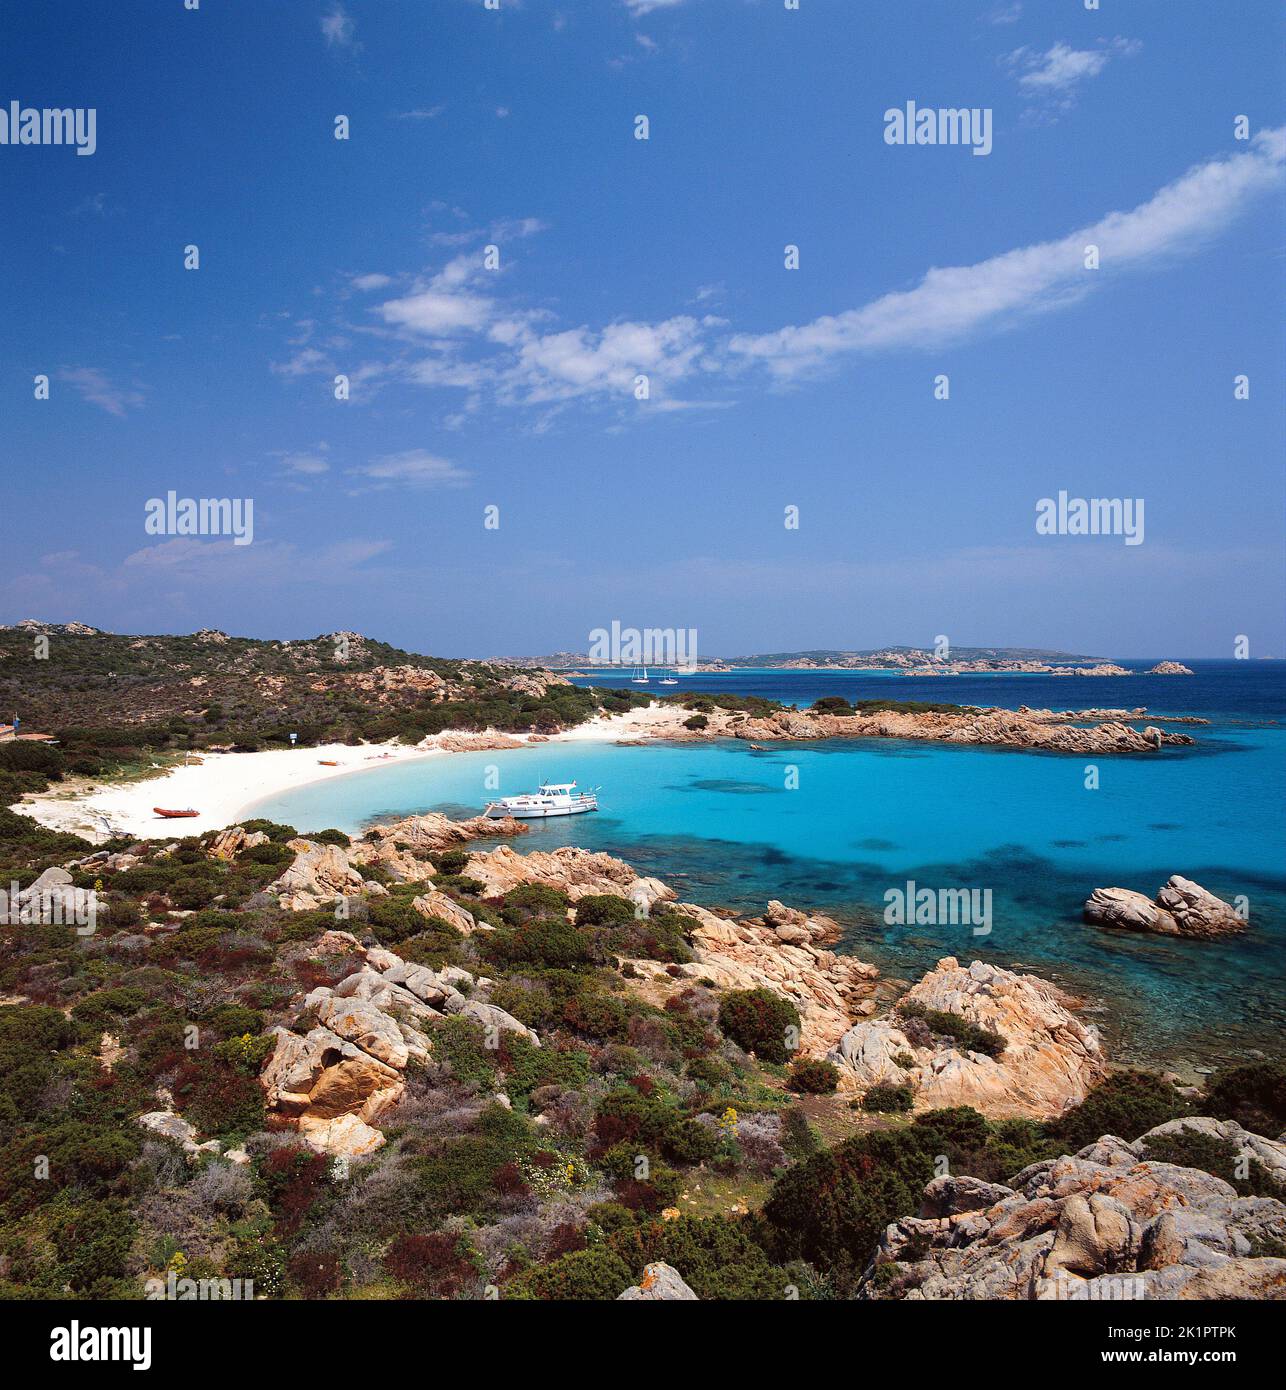 La Maddalena, Budelli Island, Cala di Roto, Spiaggia Rosa, Provincia Olbia Tempio, Sardinia, Italy, Europe Stock Photo